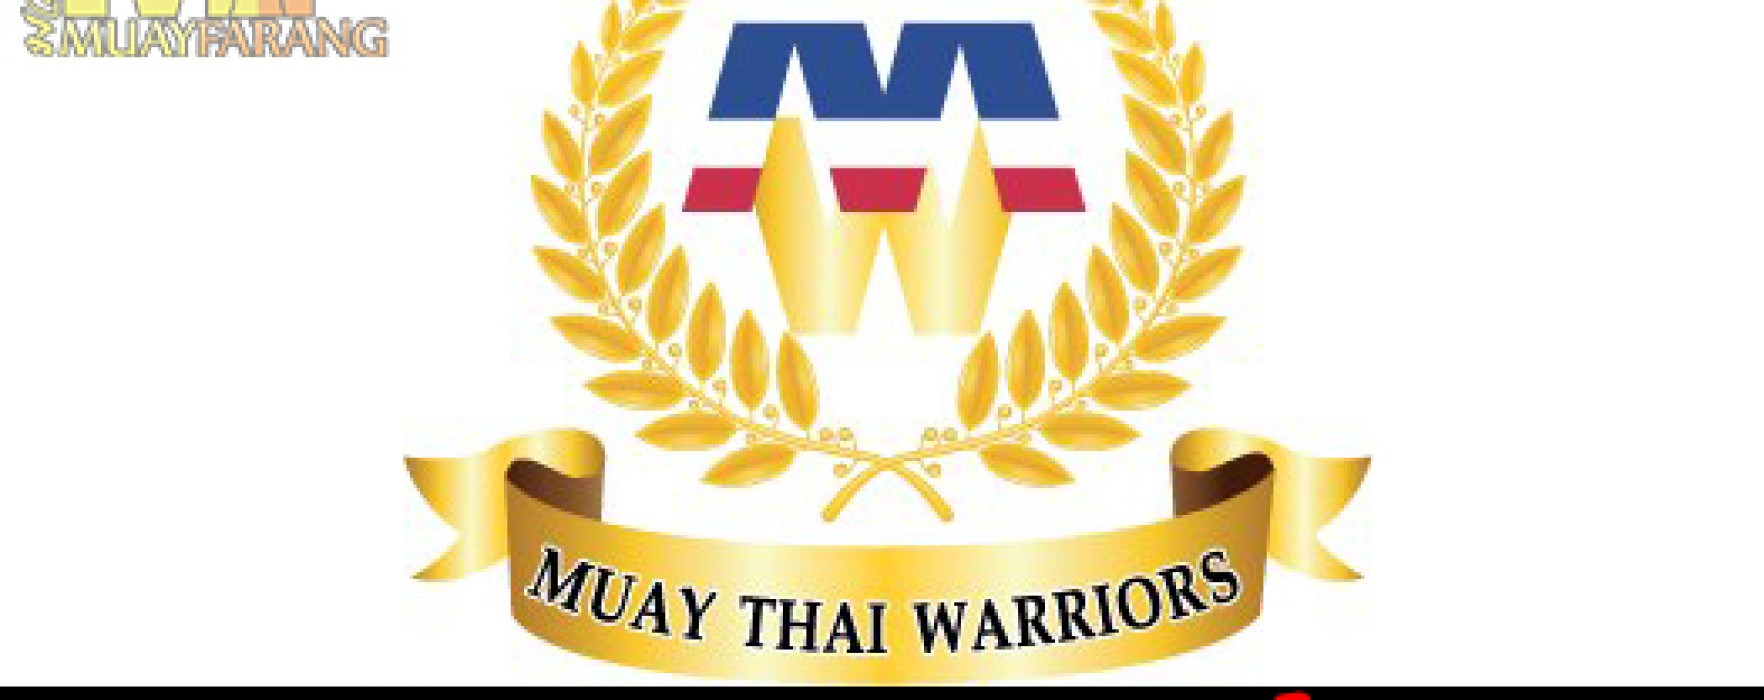 Video & Results: Muay Thai Warriors King’s Birthday 5 Dec 2013